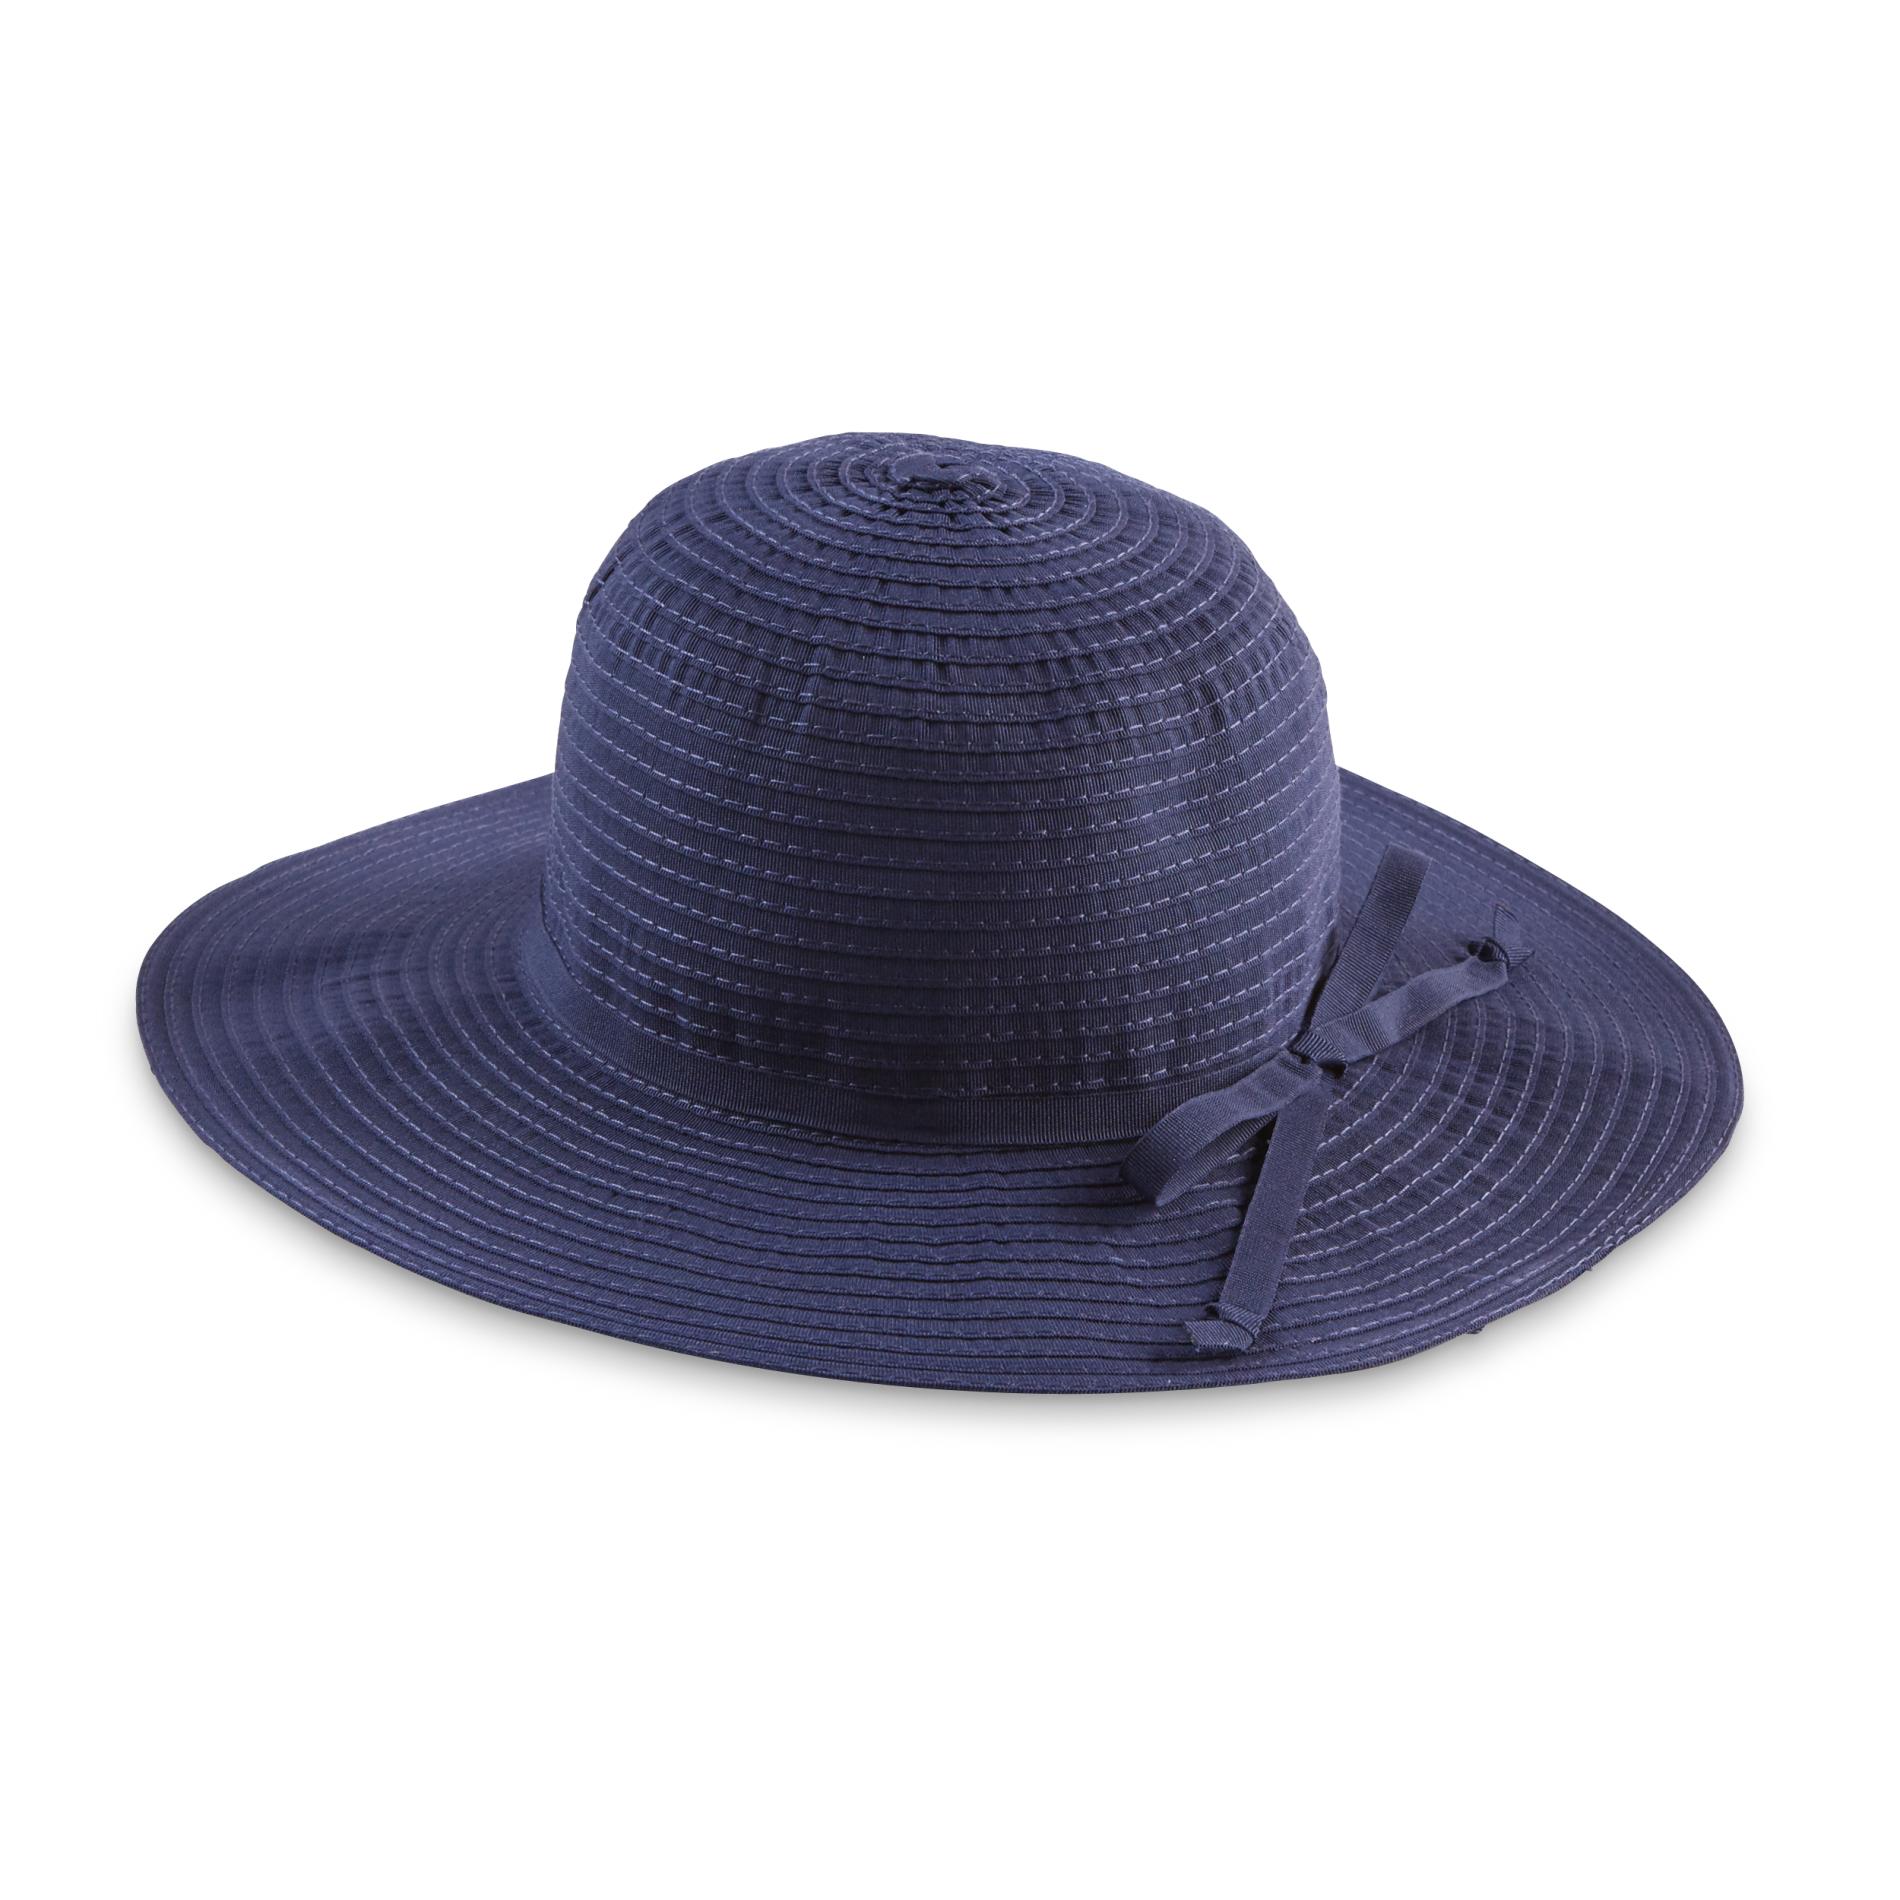 Women's Floppy Hat - Marled